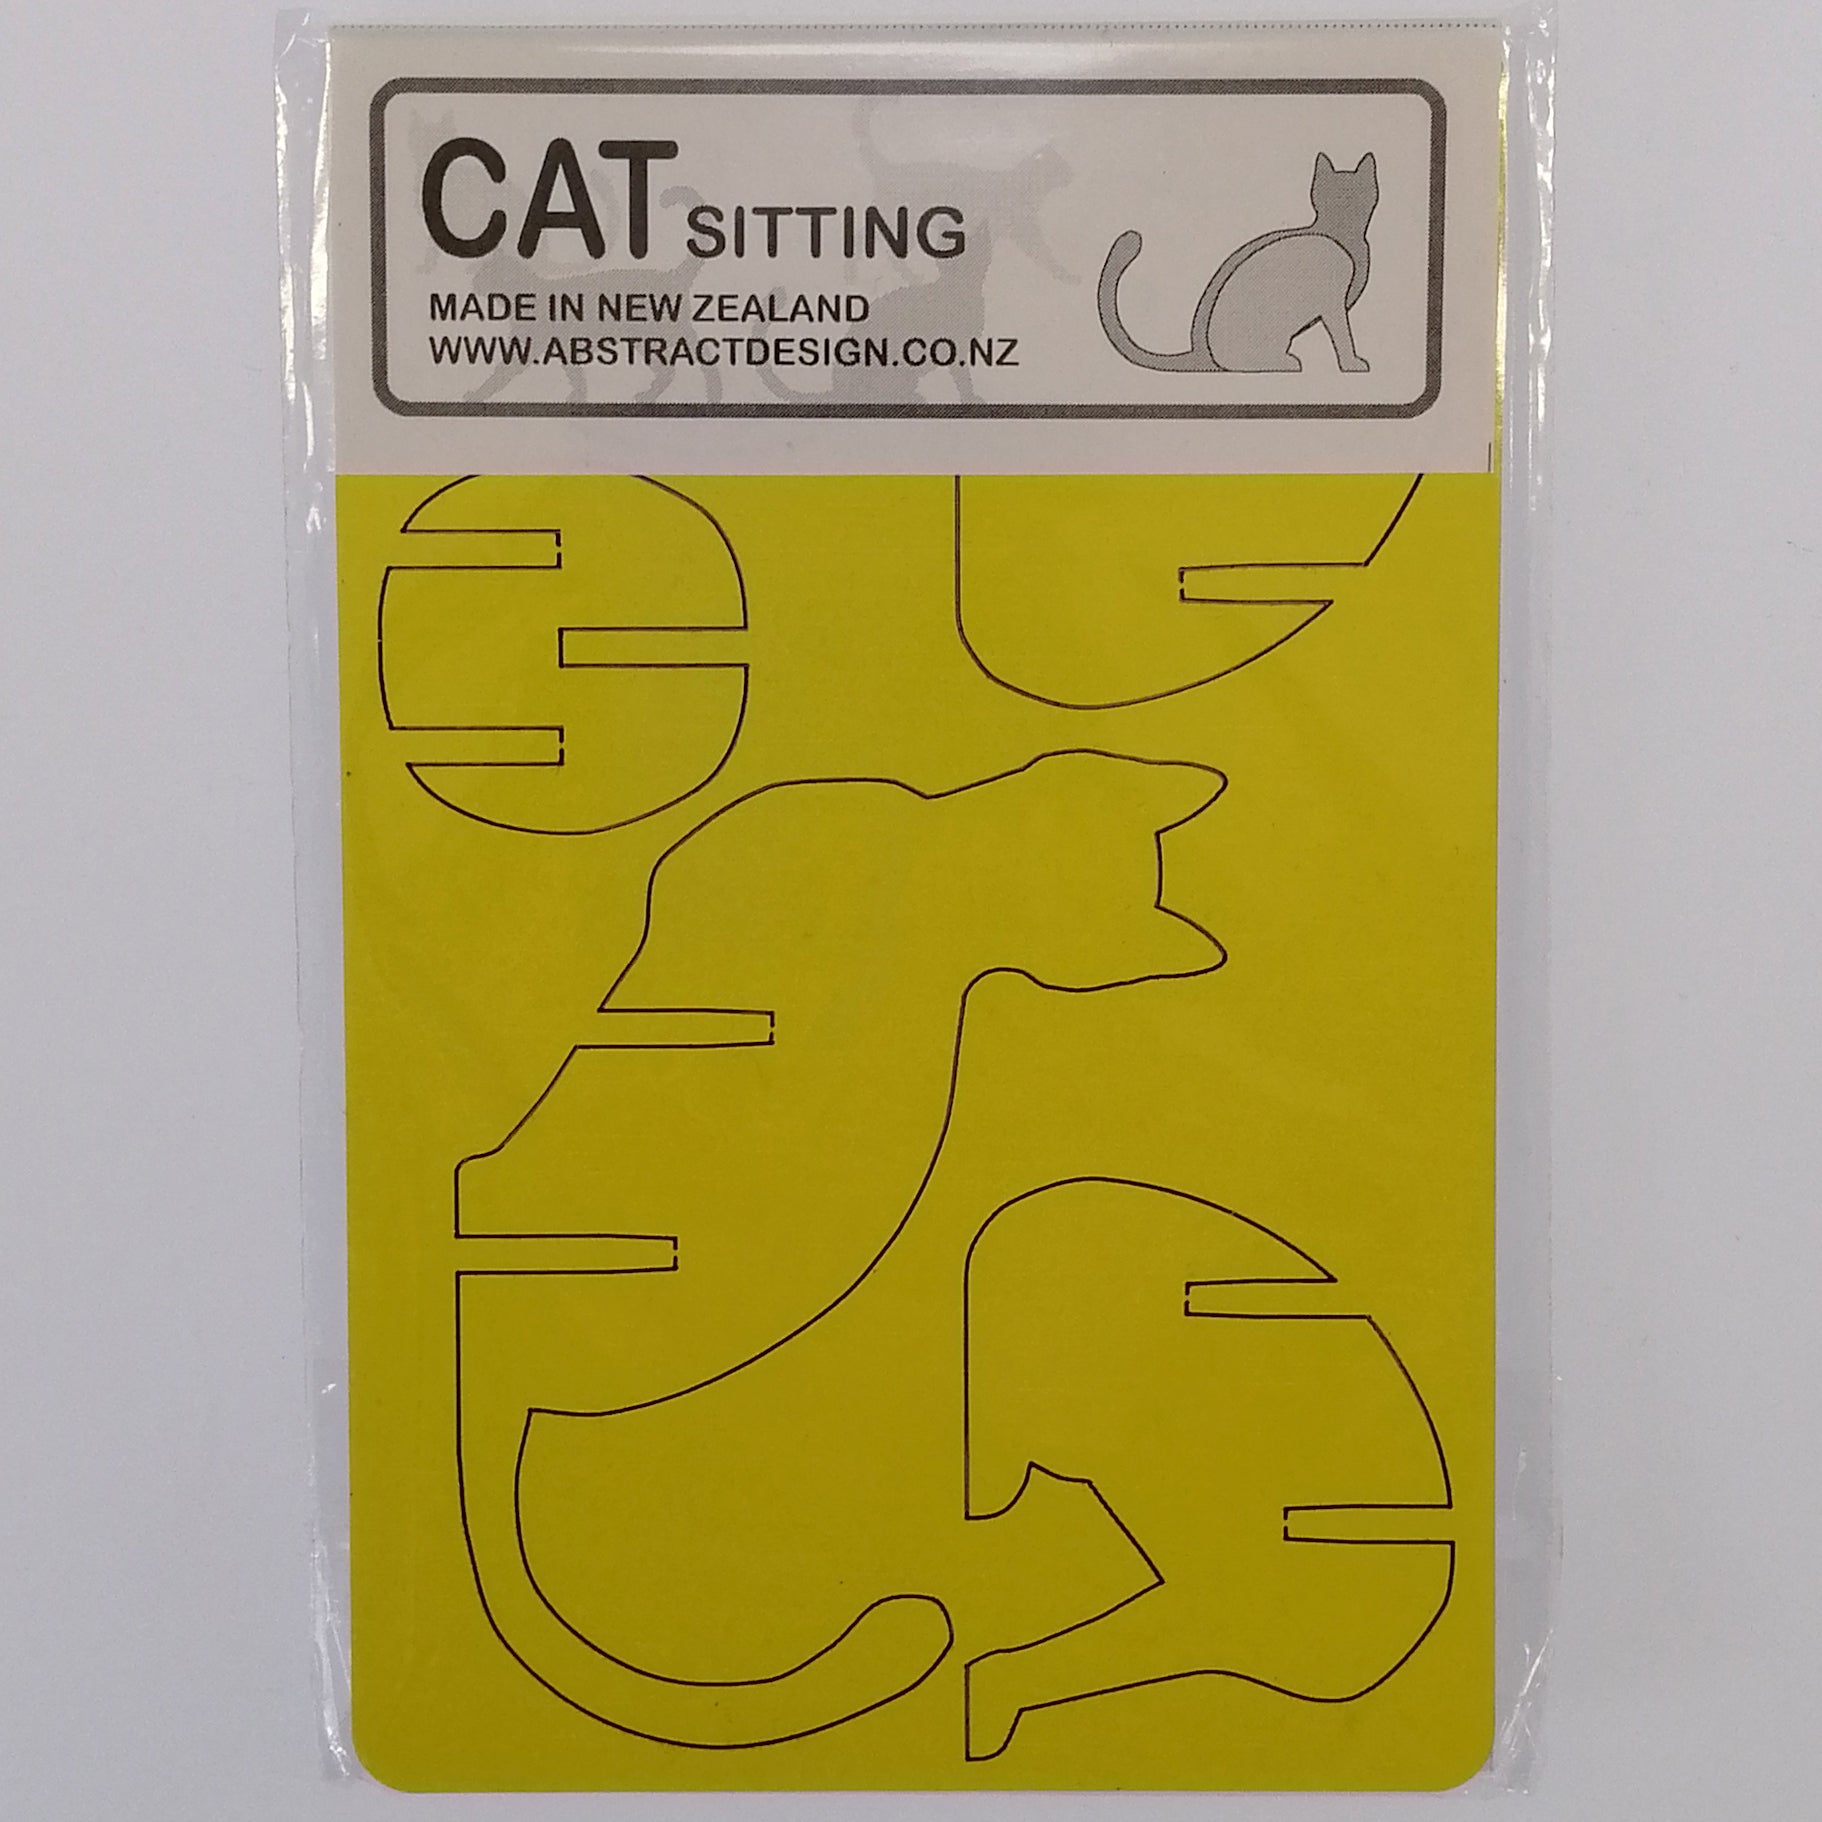 Flat-pack Kitset Wooden Model - Cat Sitting - Yellow